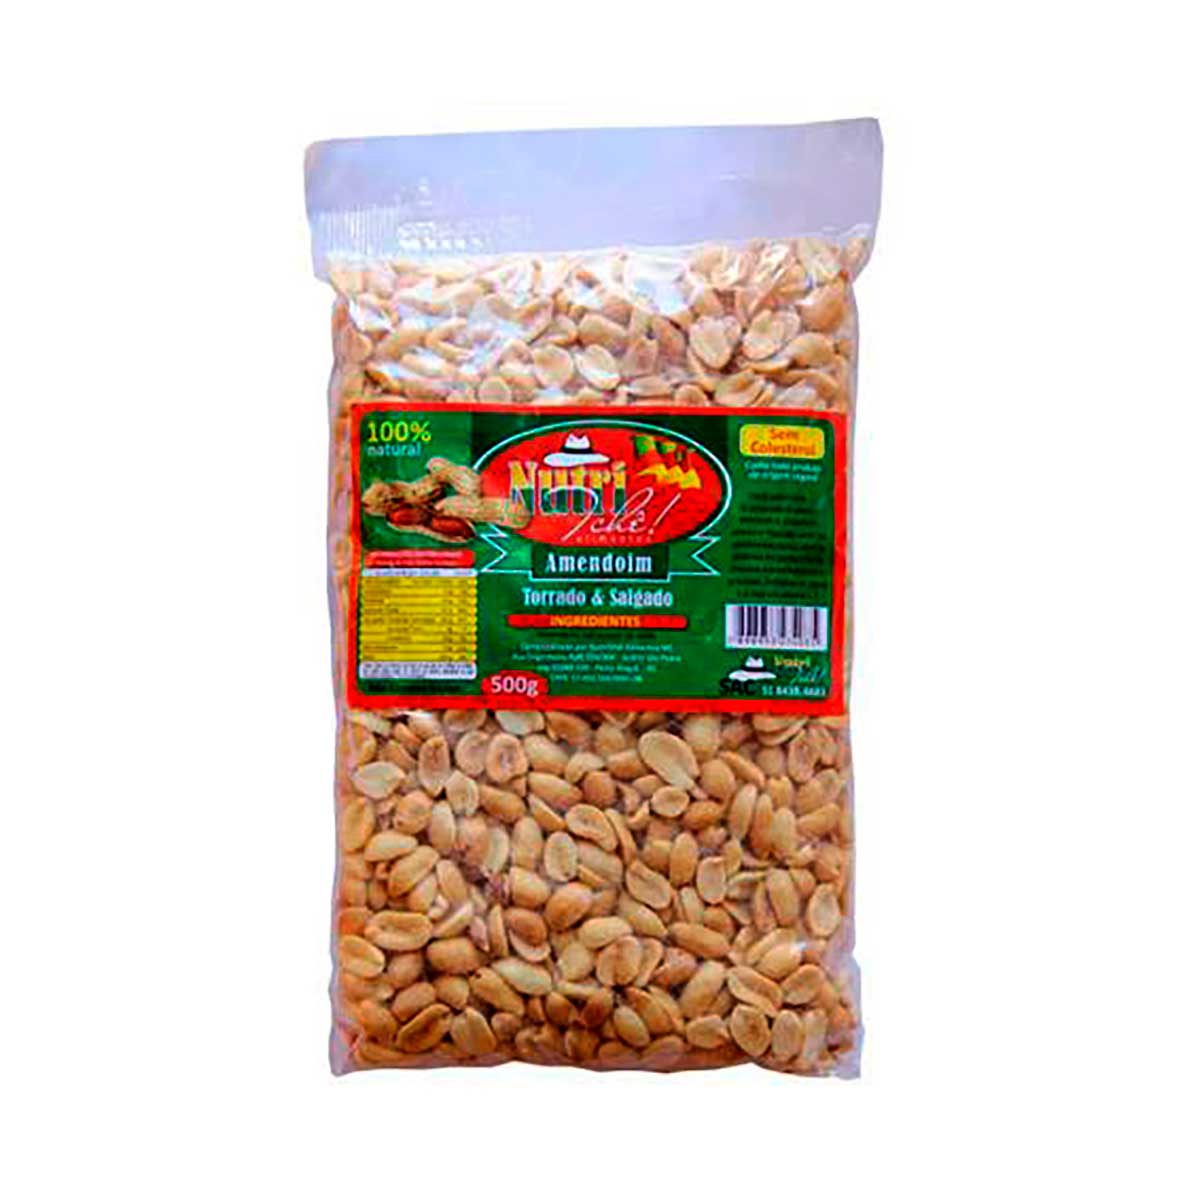 amendoim-torrado-sal-nutri-tche-160g-1.jpg